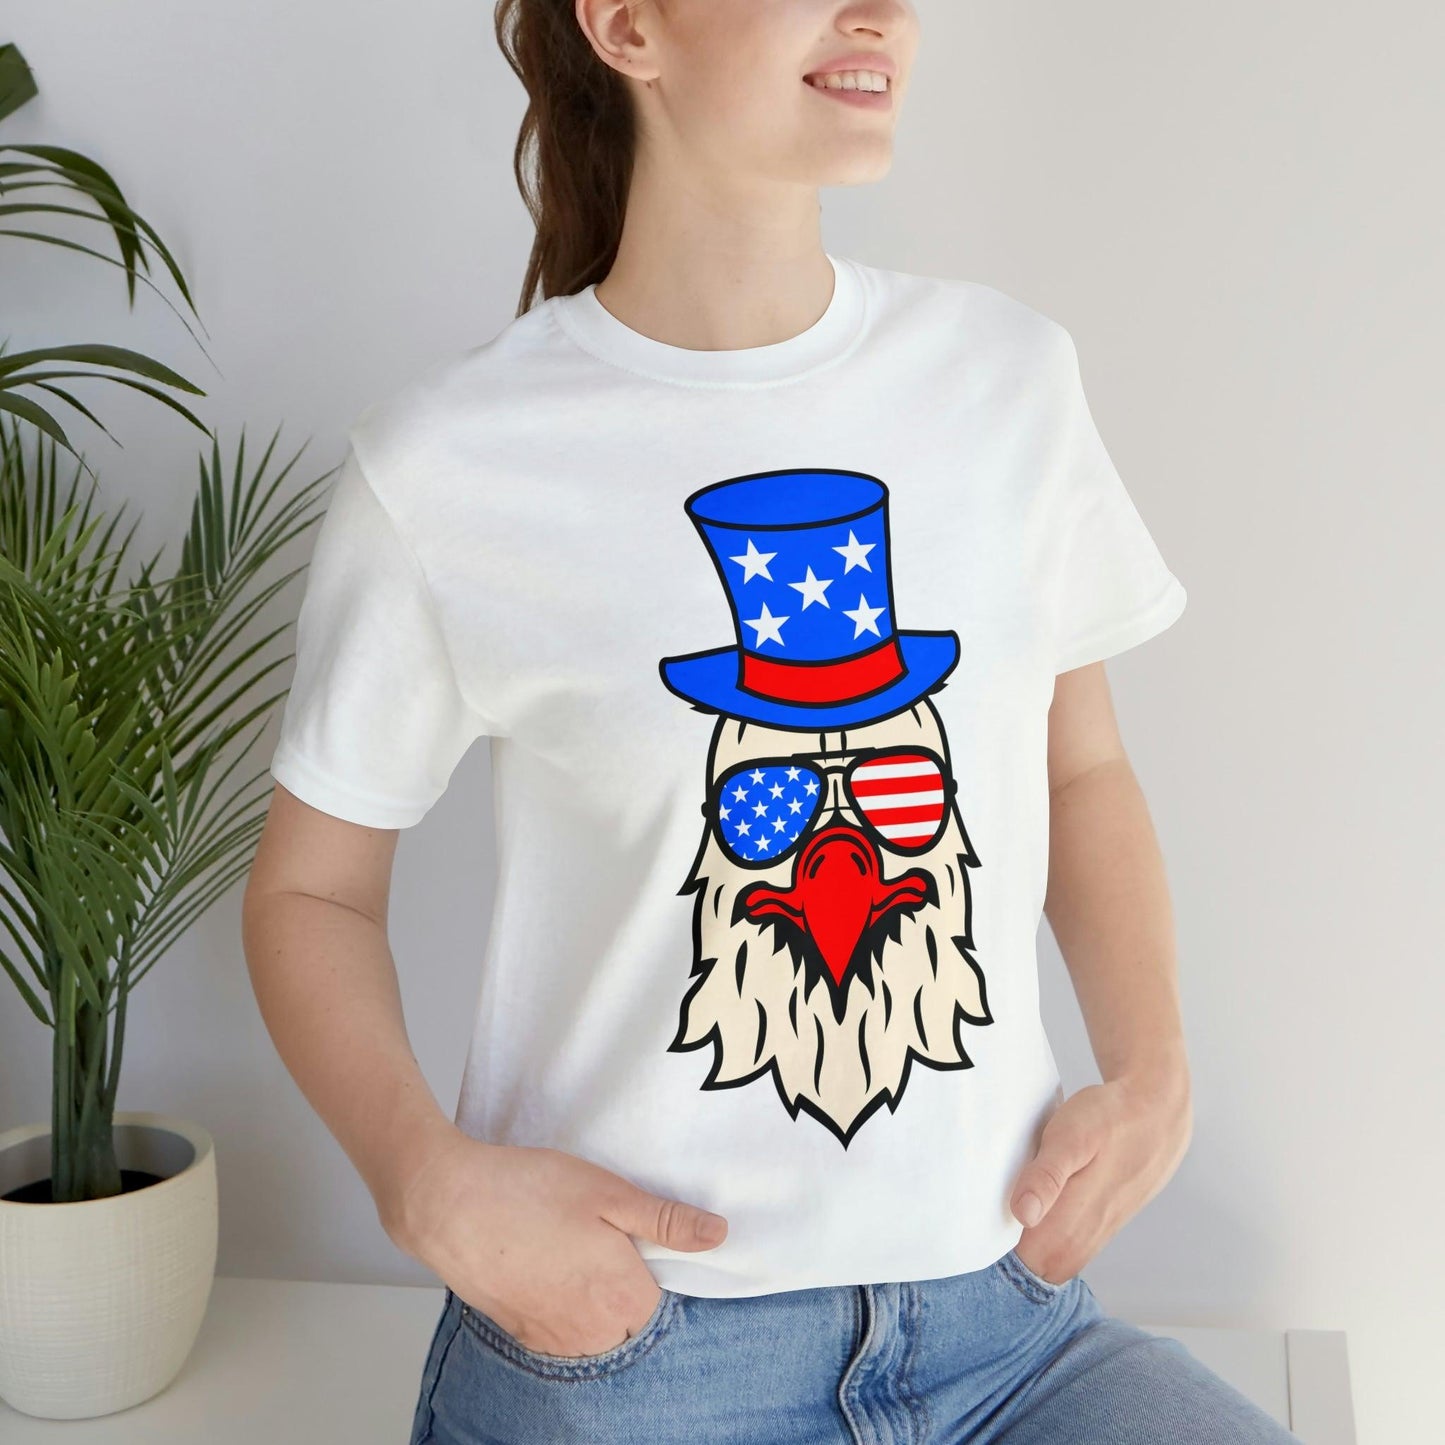 Memorial Day shirt, flag shirt, America, red white and blue Freedom shirt,